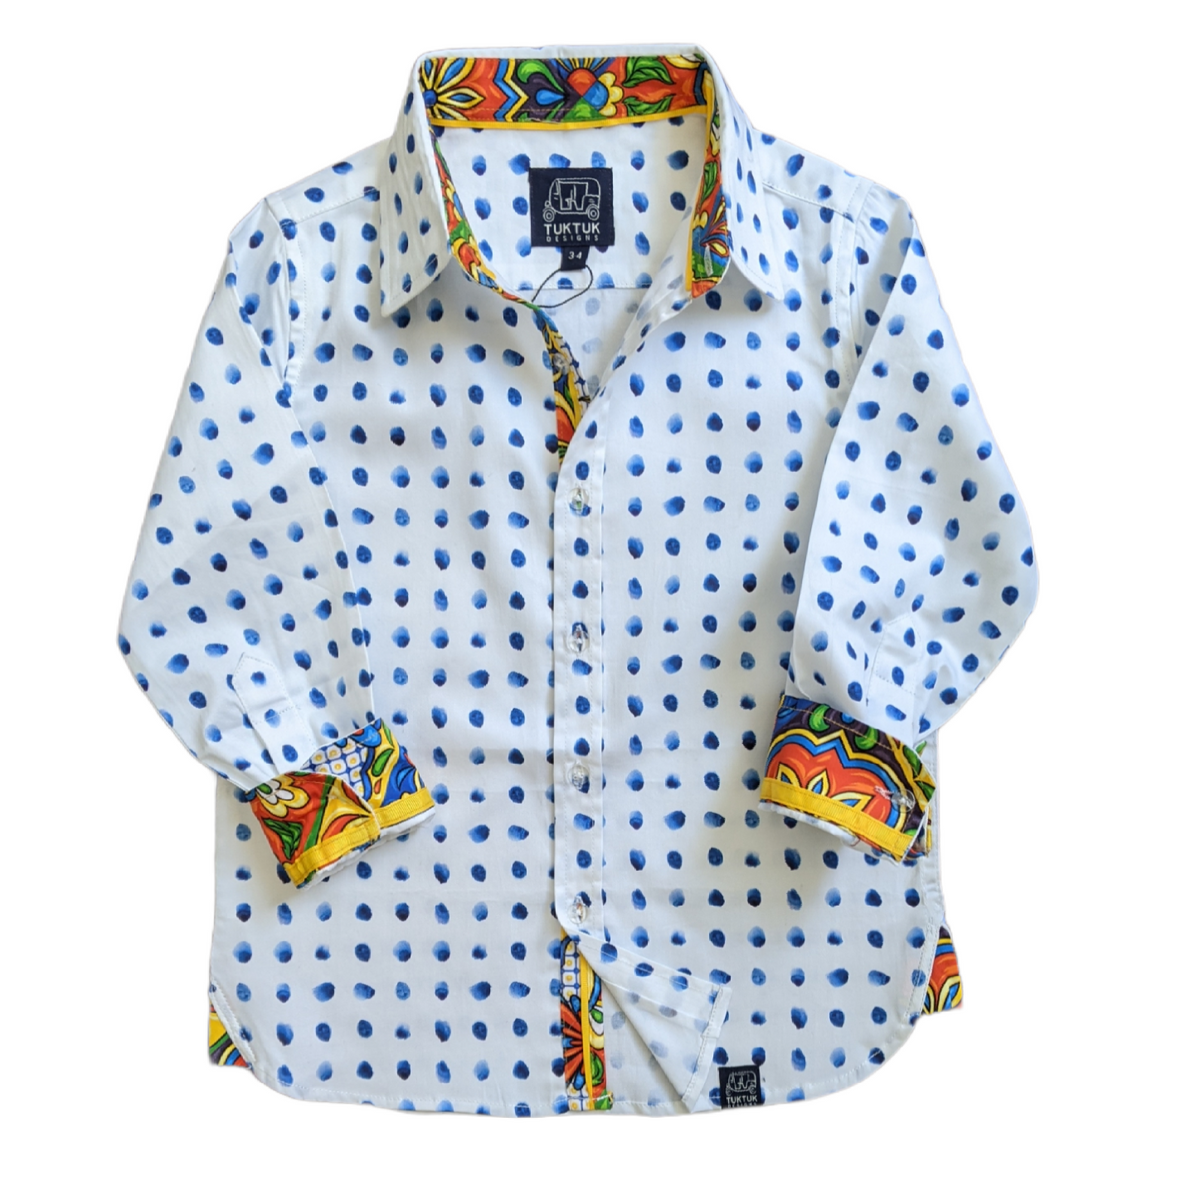 Watercolor Dots Shirt in Long Sleeves